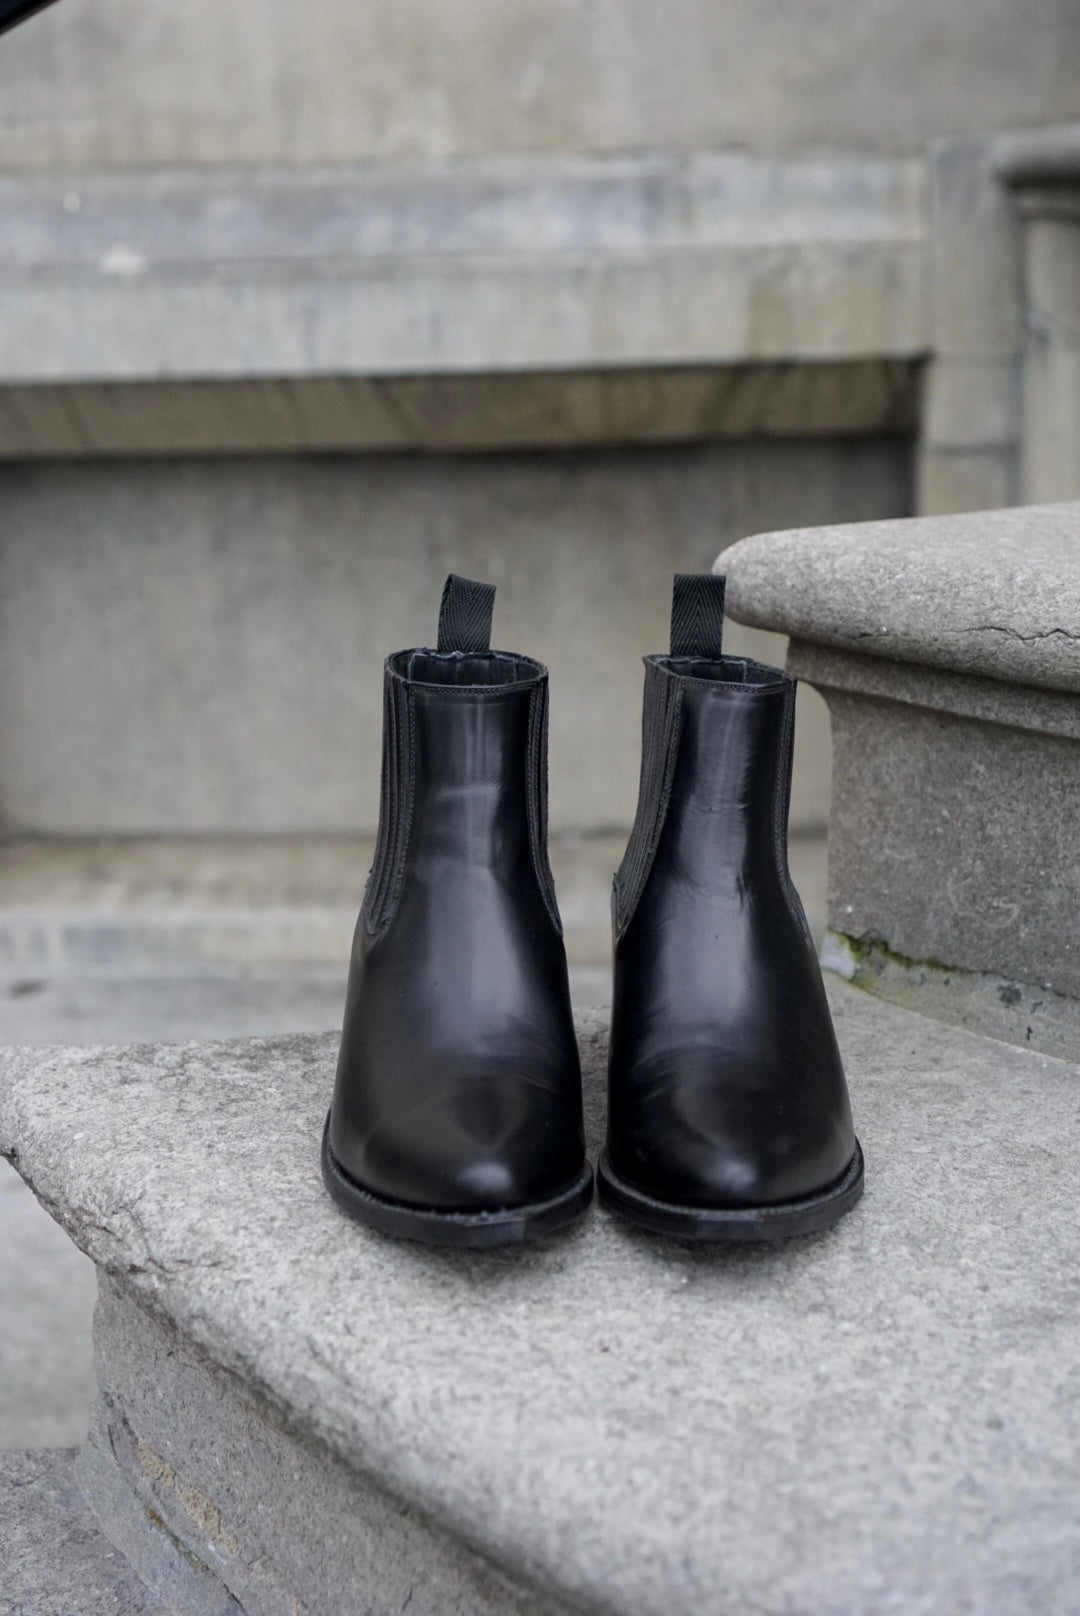 Lia London boots